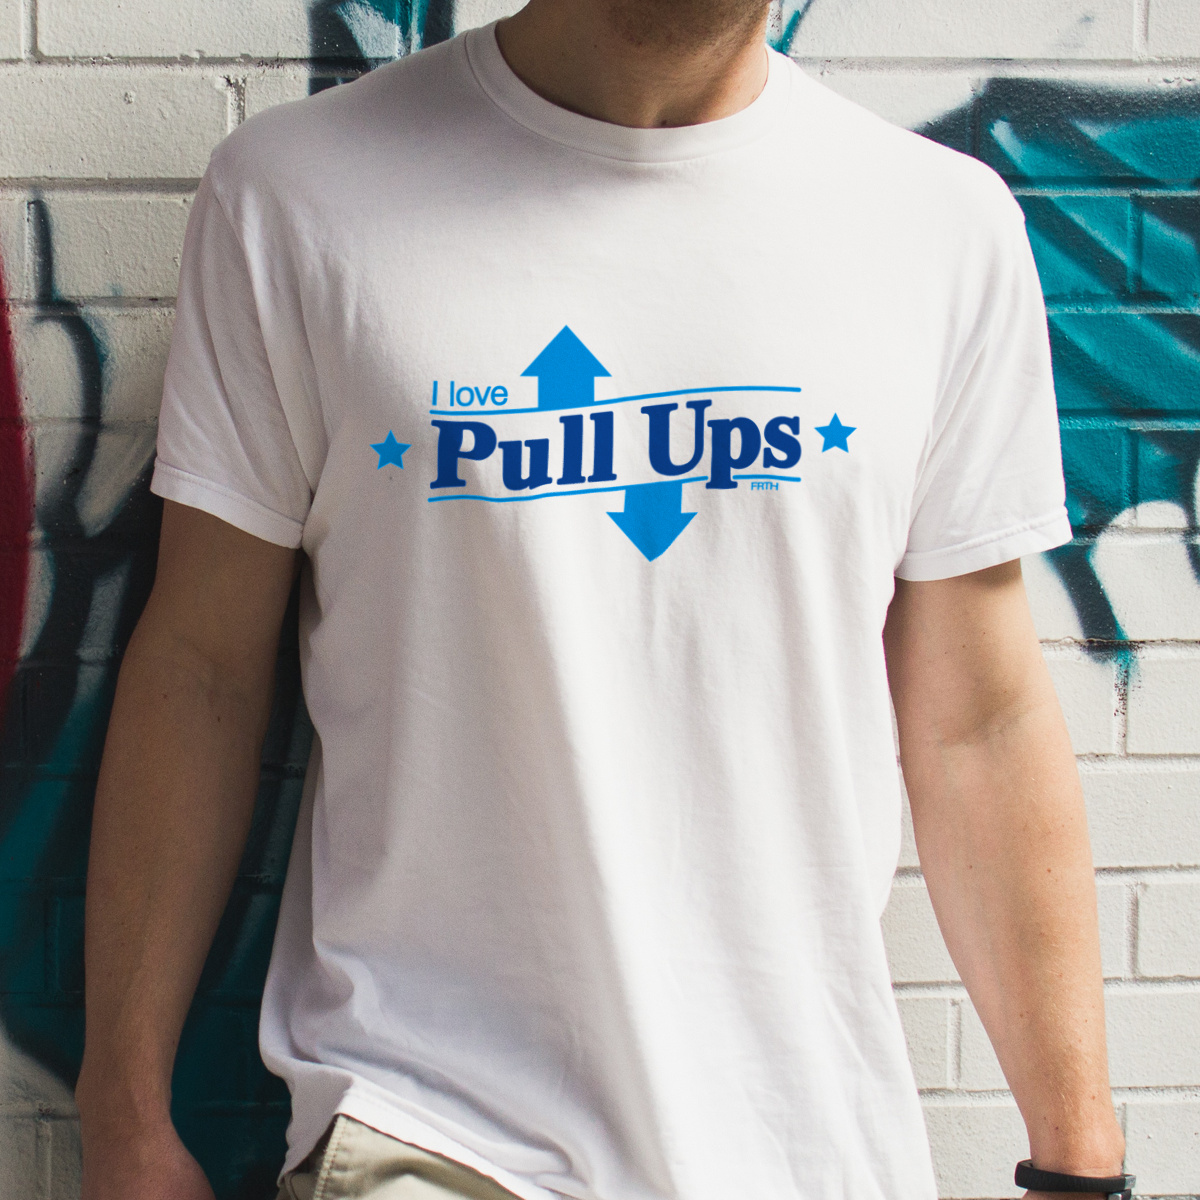 I Love Pull Ups - Męska Koszulka Biała